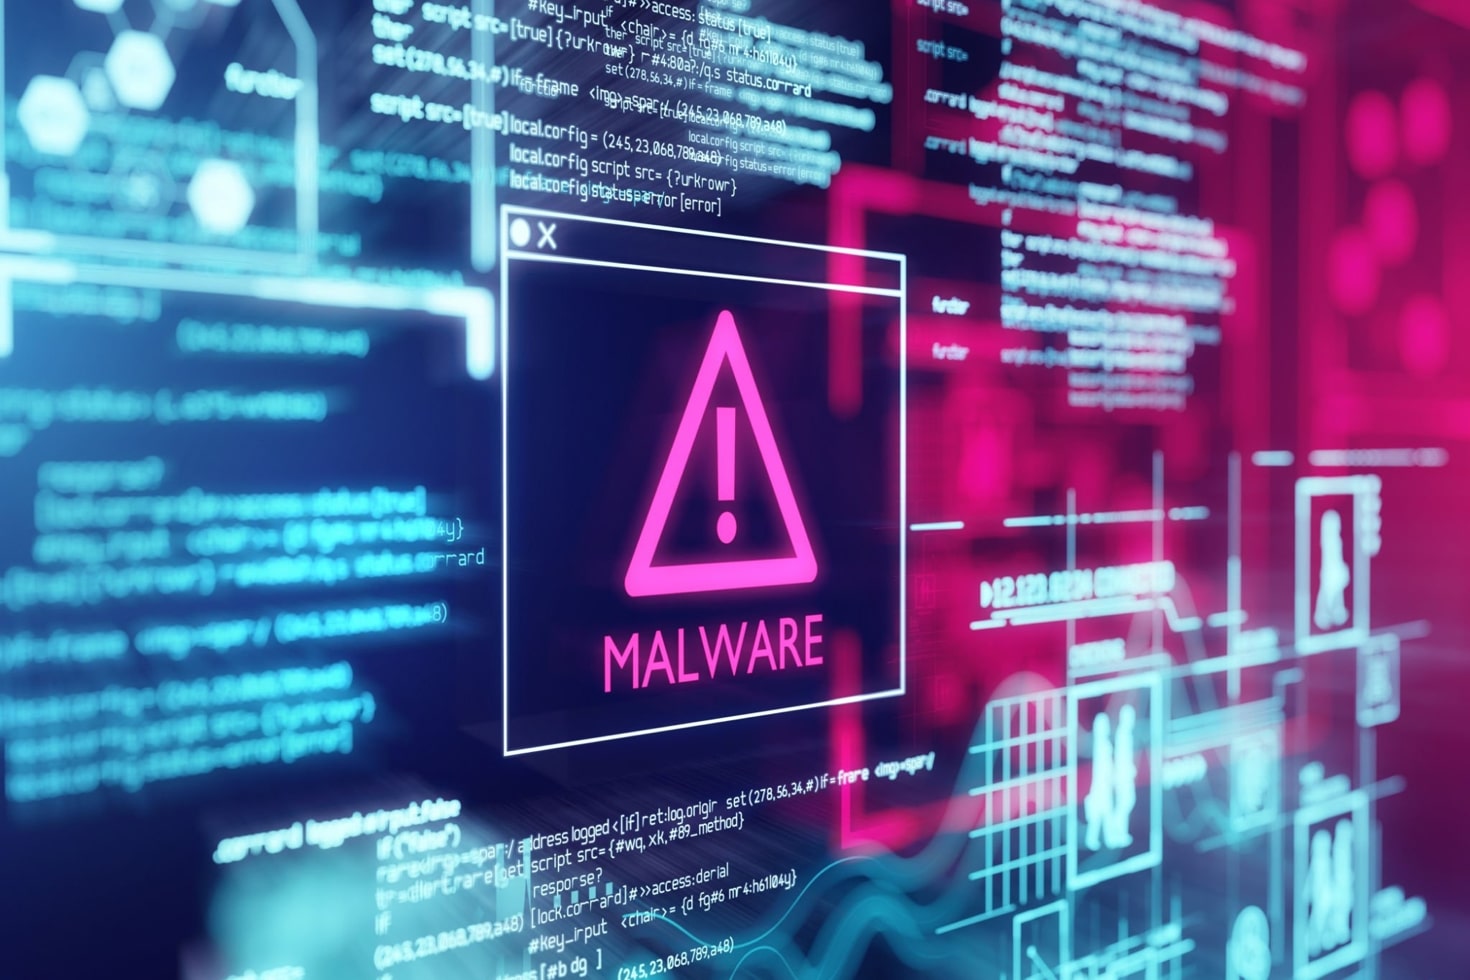 Malware warning window